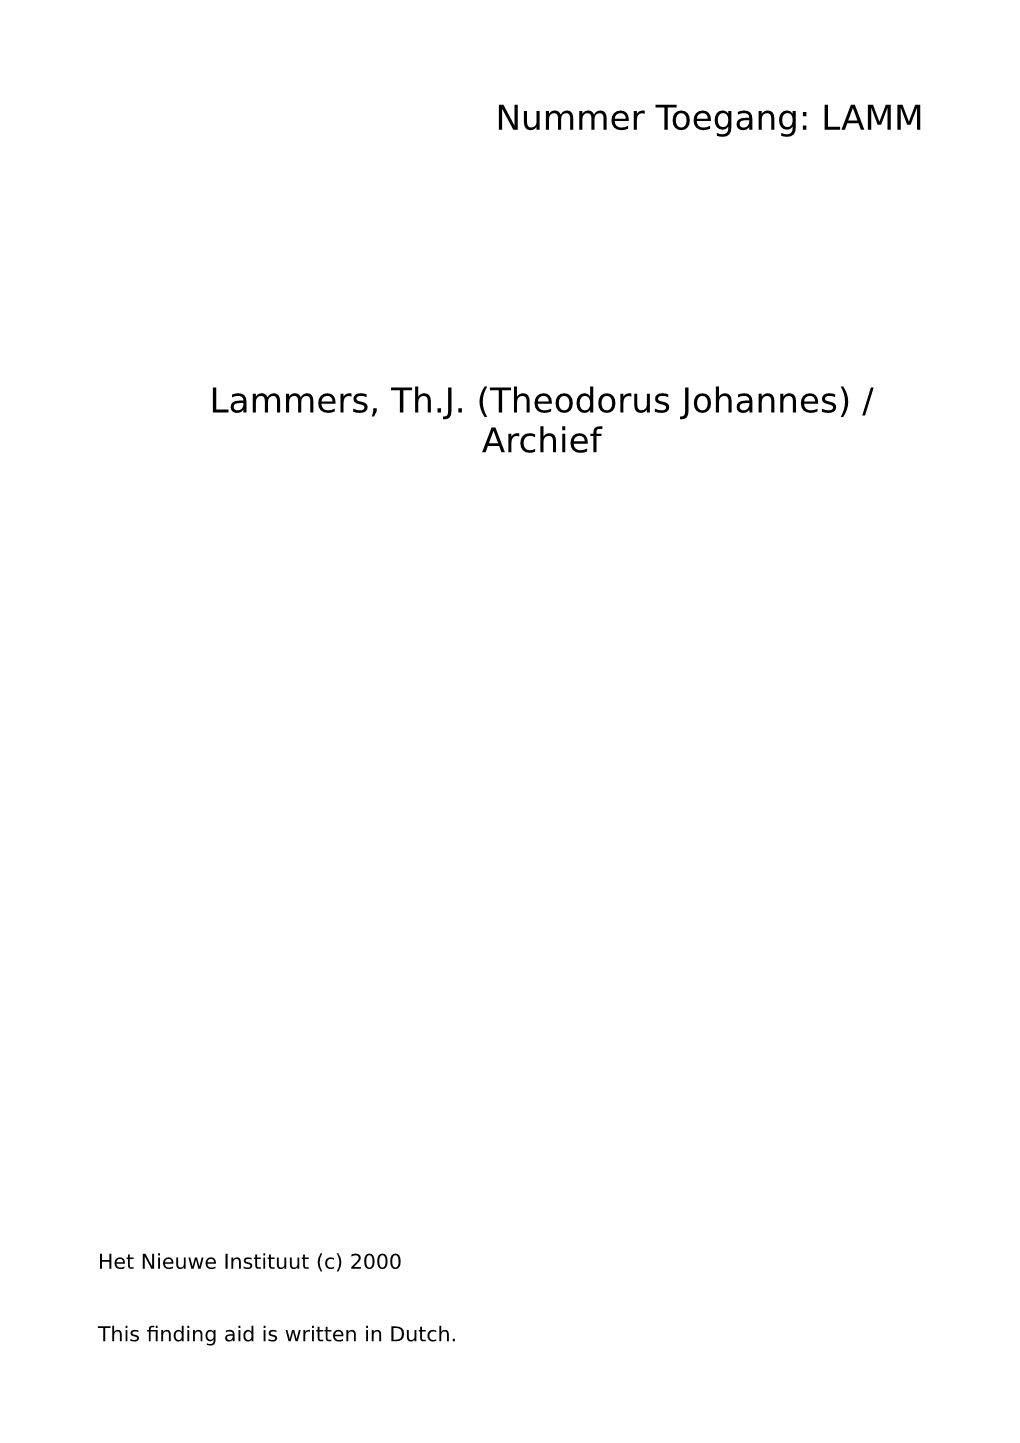 Lammers, Th.J. (Theodorus Johannes) / Archief